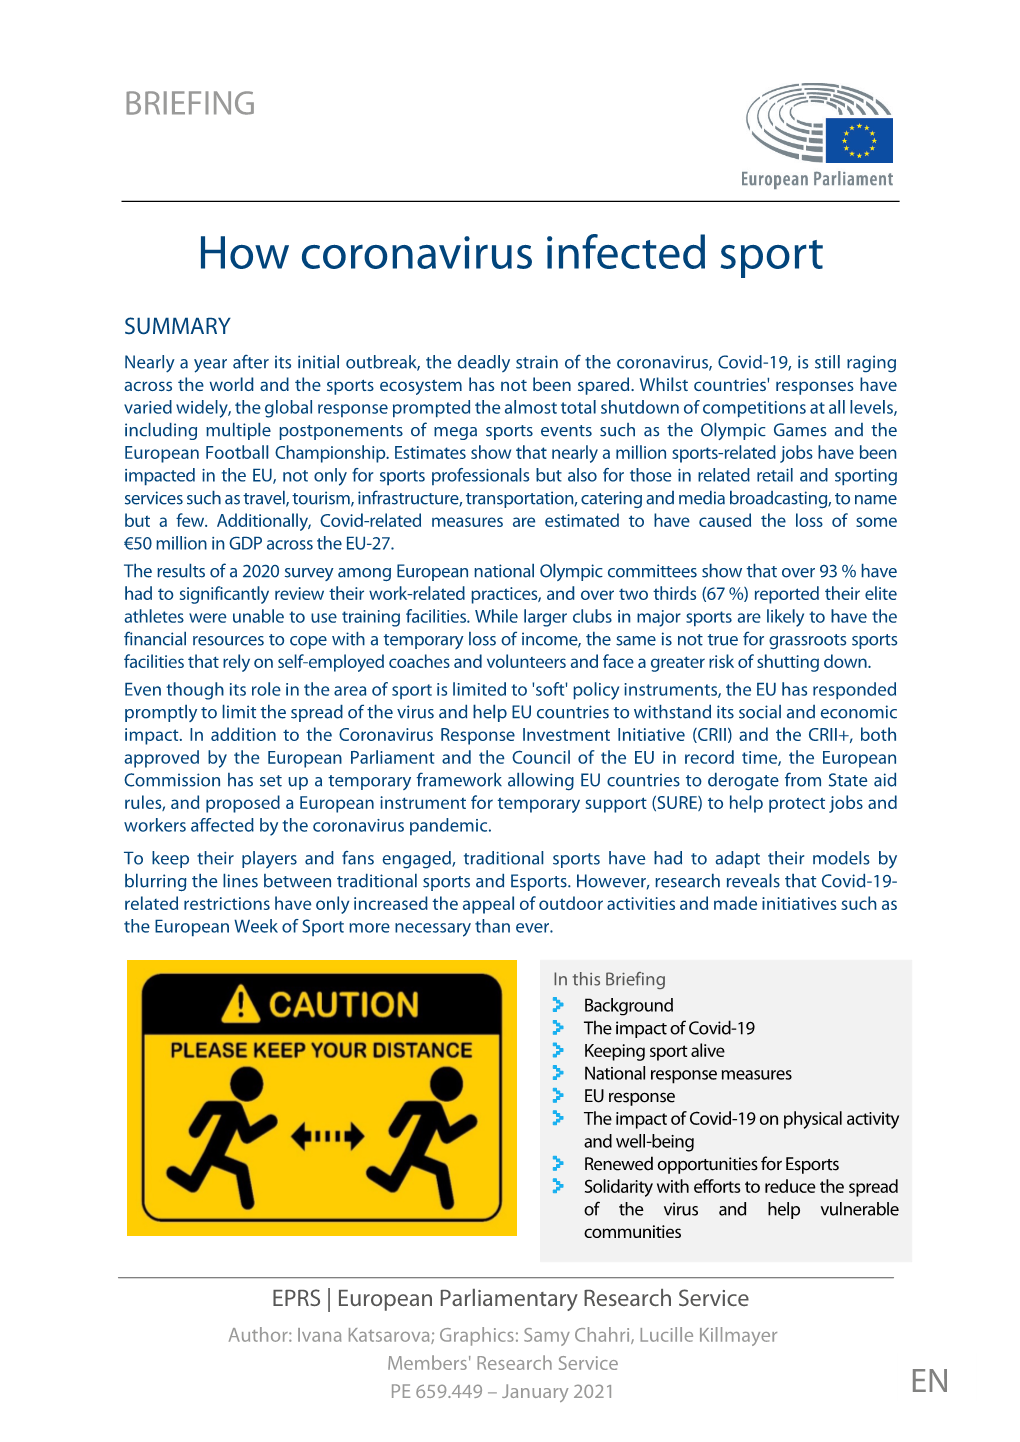 How Coronavirus Infected Sport